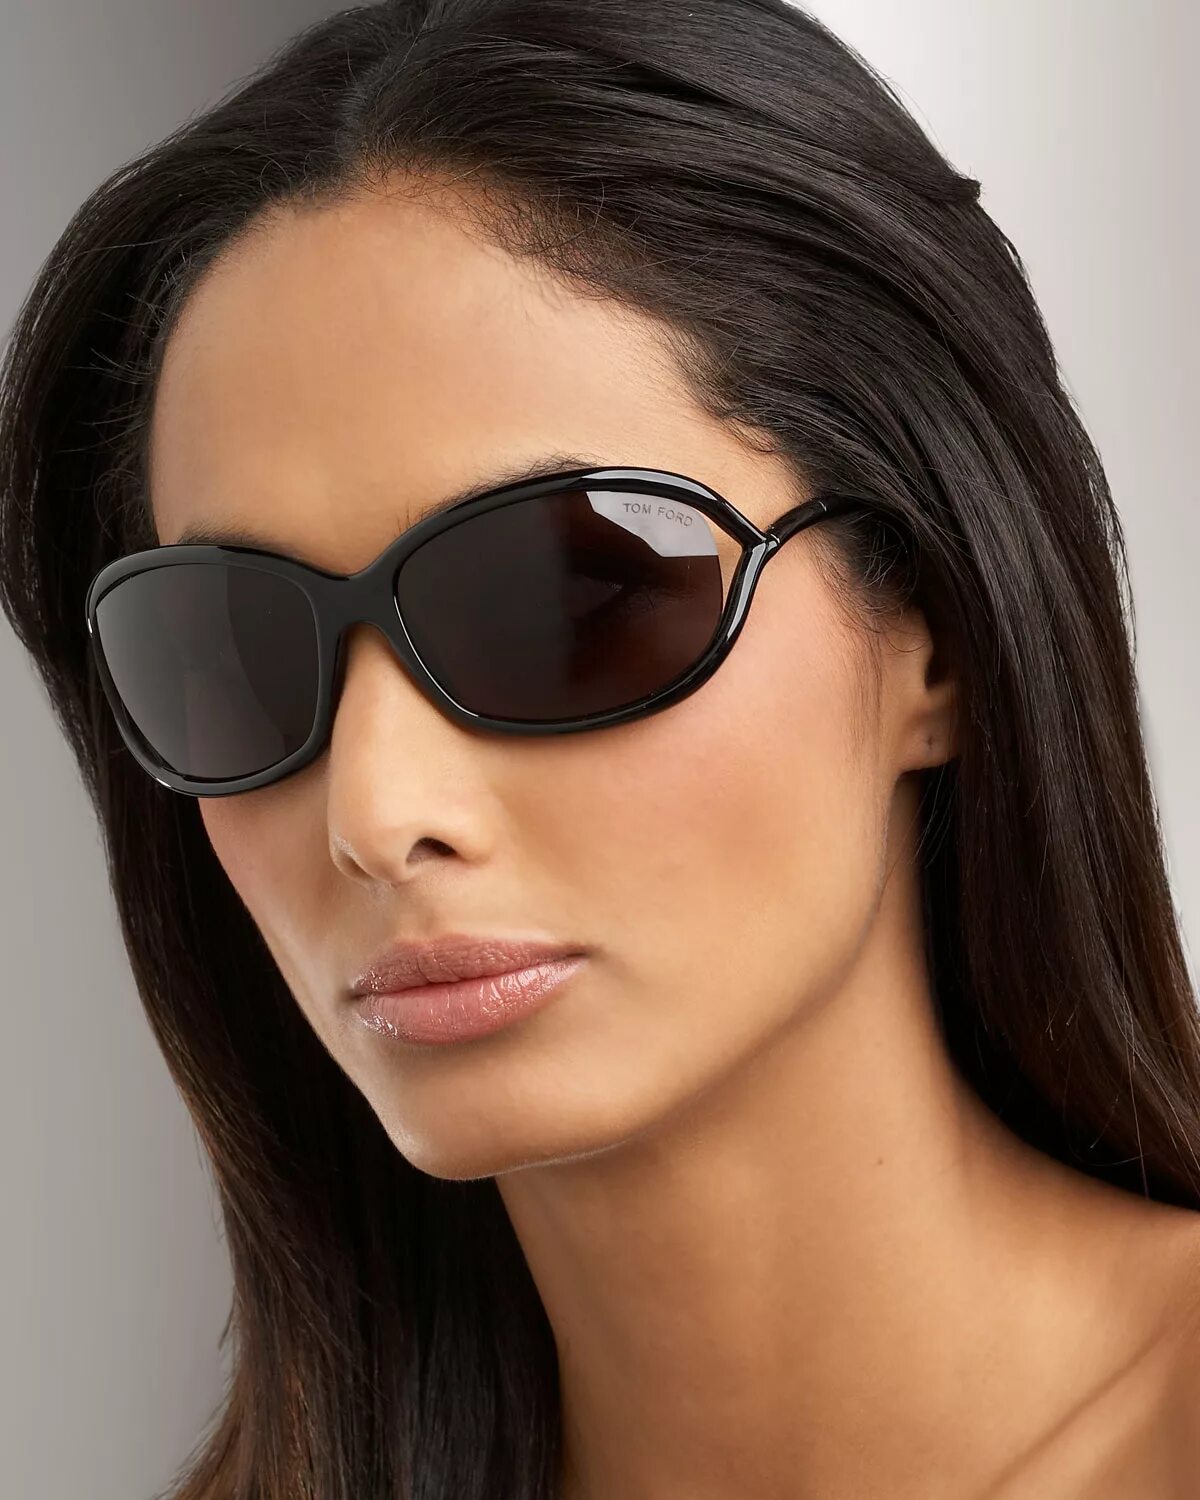 Tom Ford Sunglasses очки. Солнцезащитные очки Tom Ford Jennifer. Tom Ford очки солнцезащитные Wayfarer. Tom Ford Glasses ft5224.